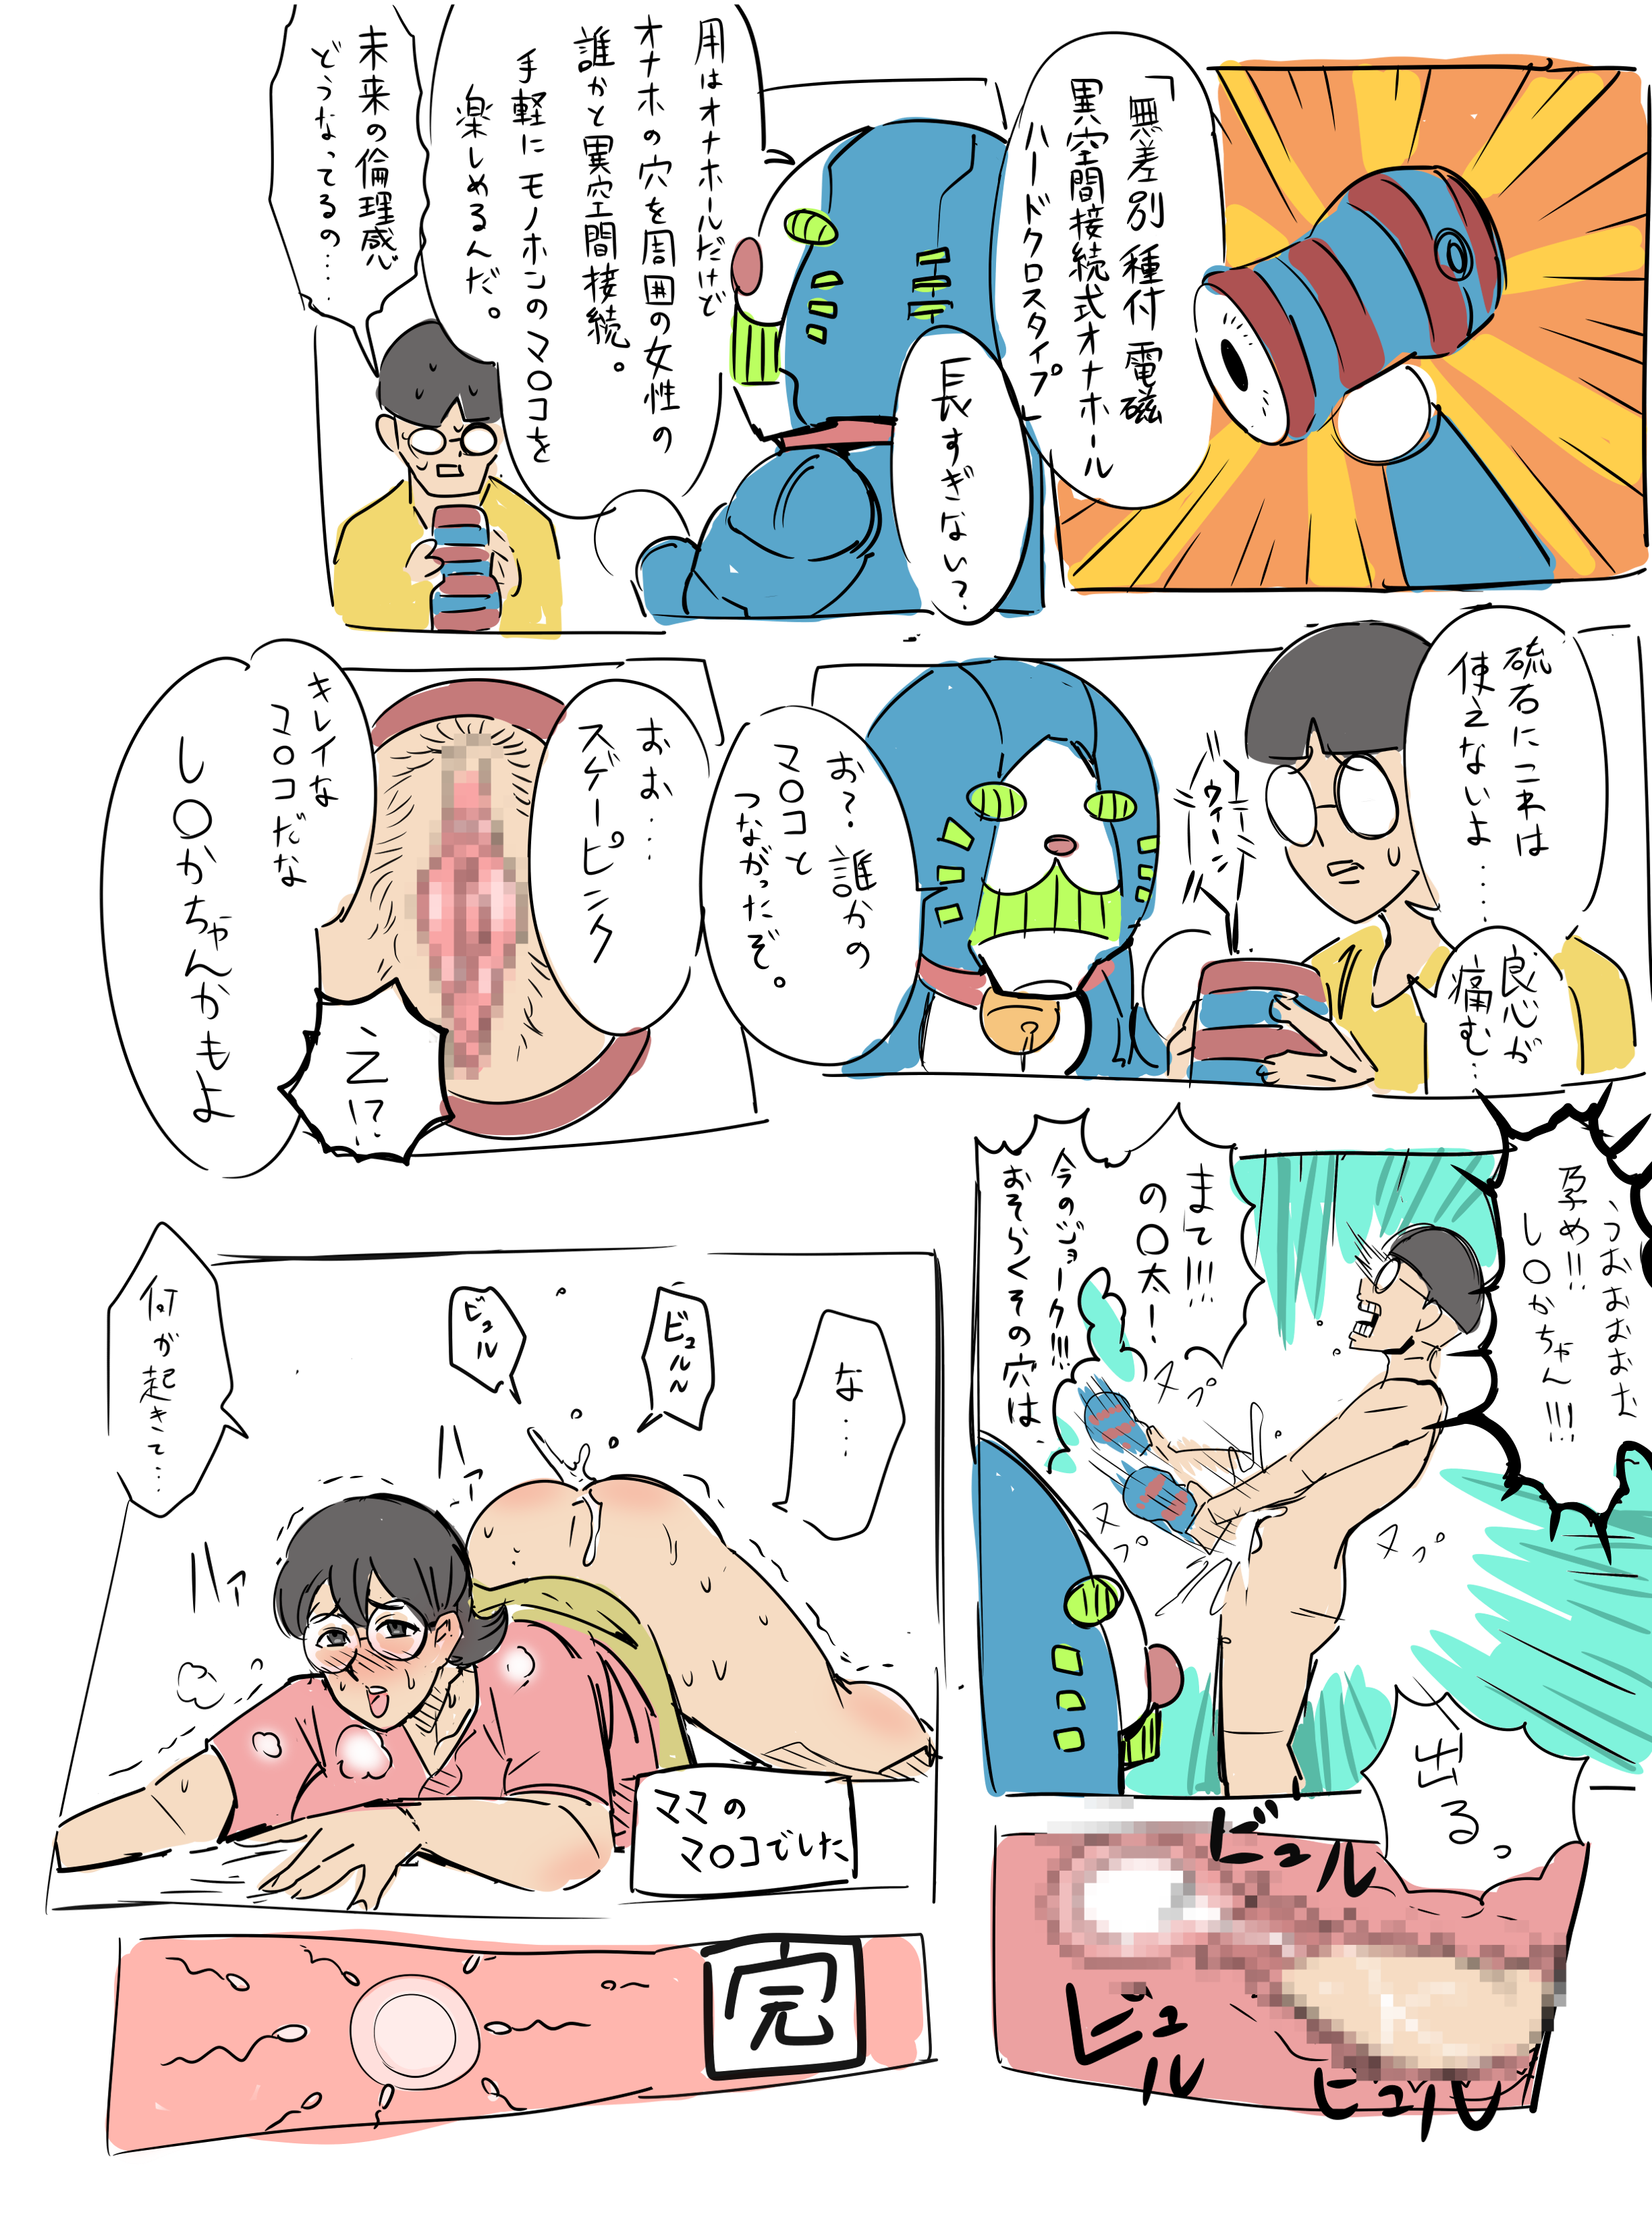 Post 3801537: Doraemon Kandenki Nobita_Nobi Tamako_Nobi